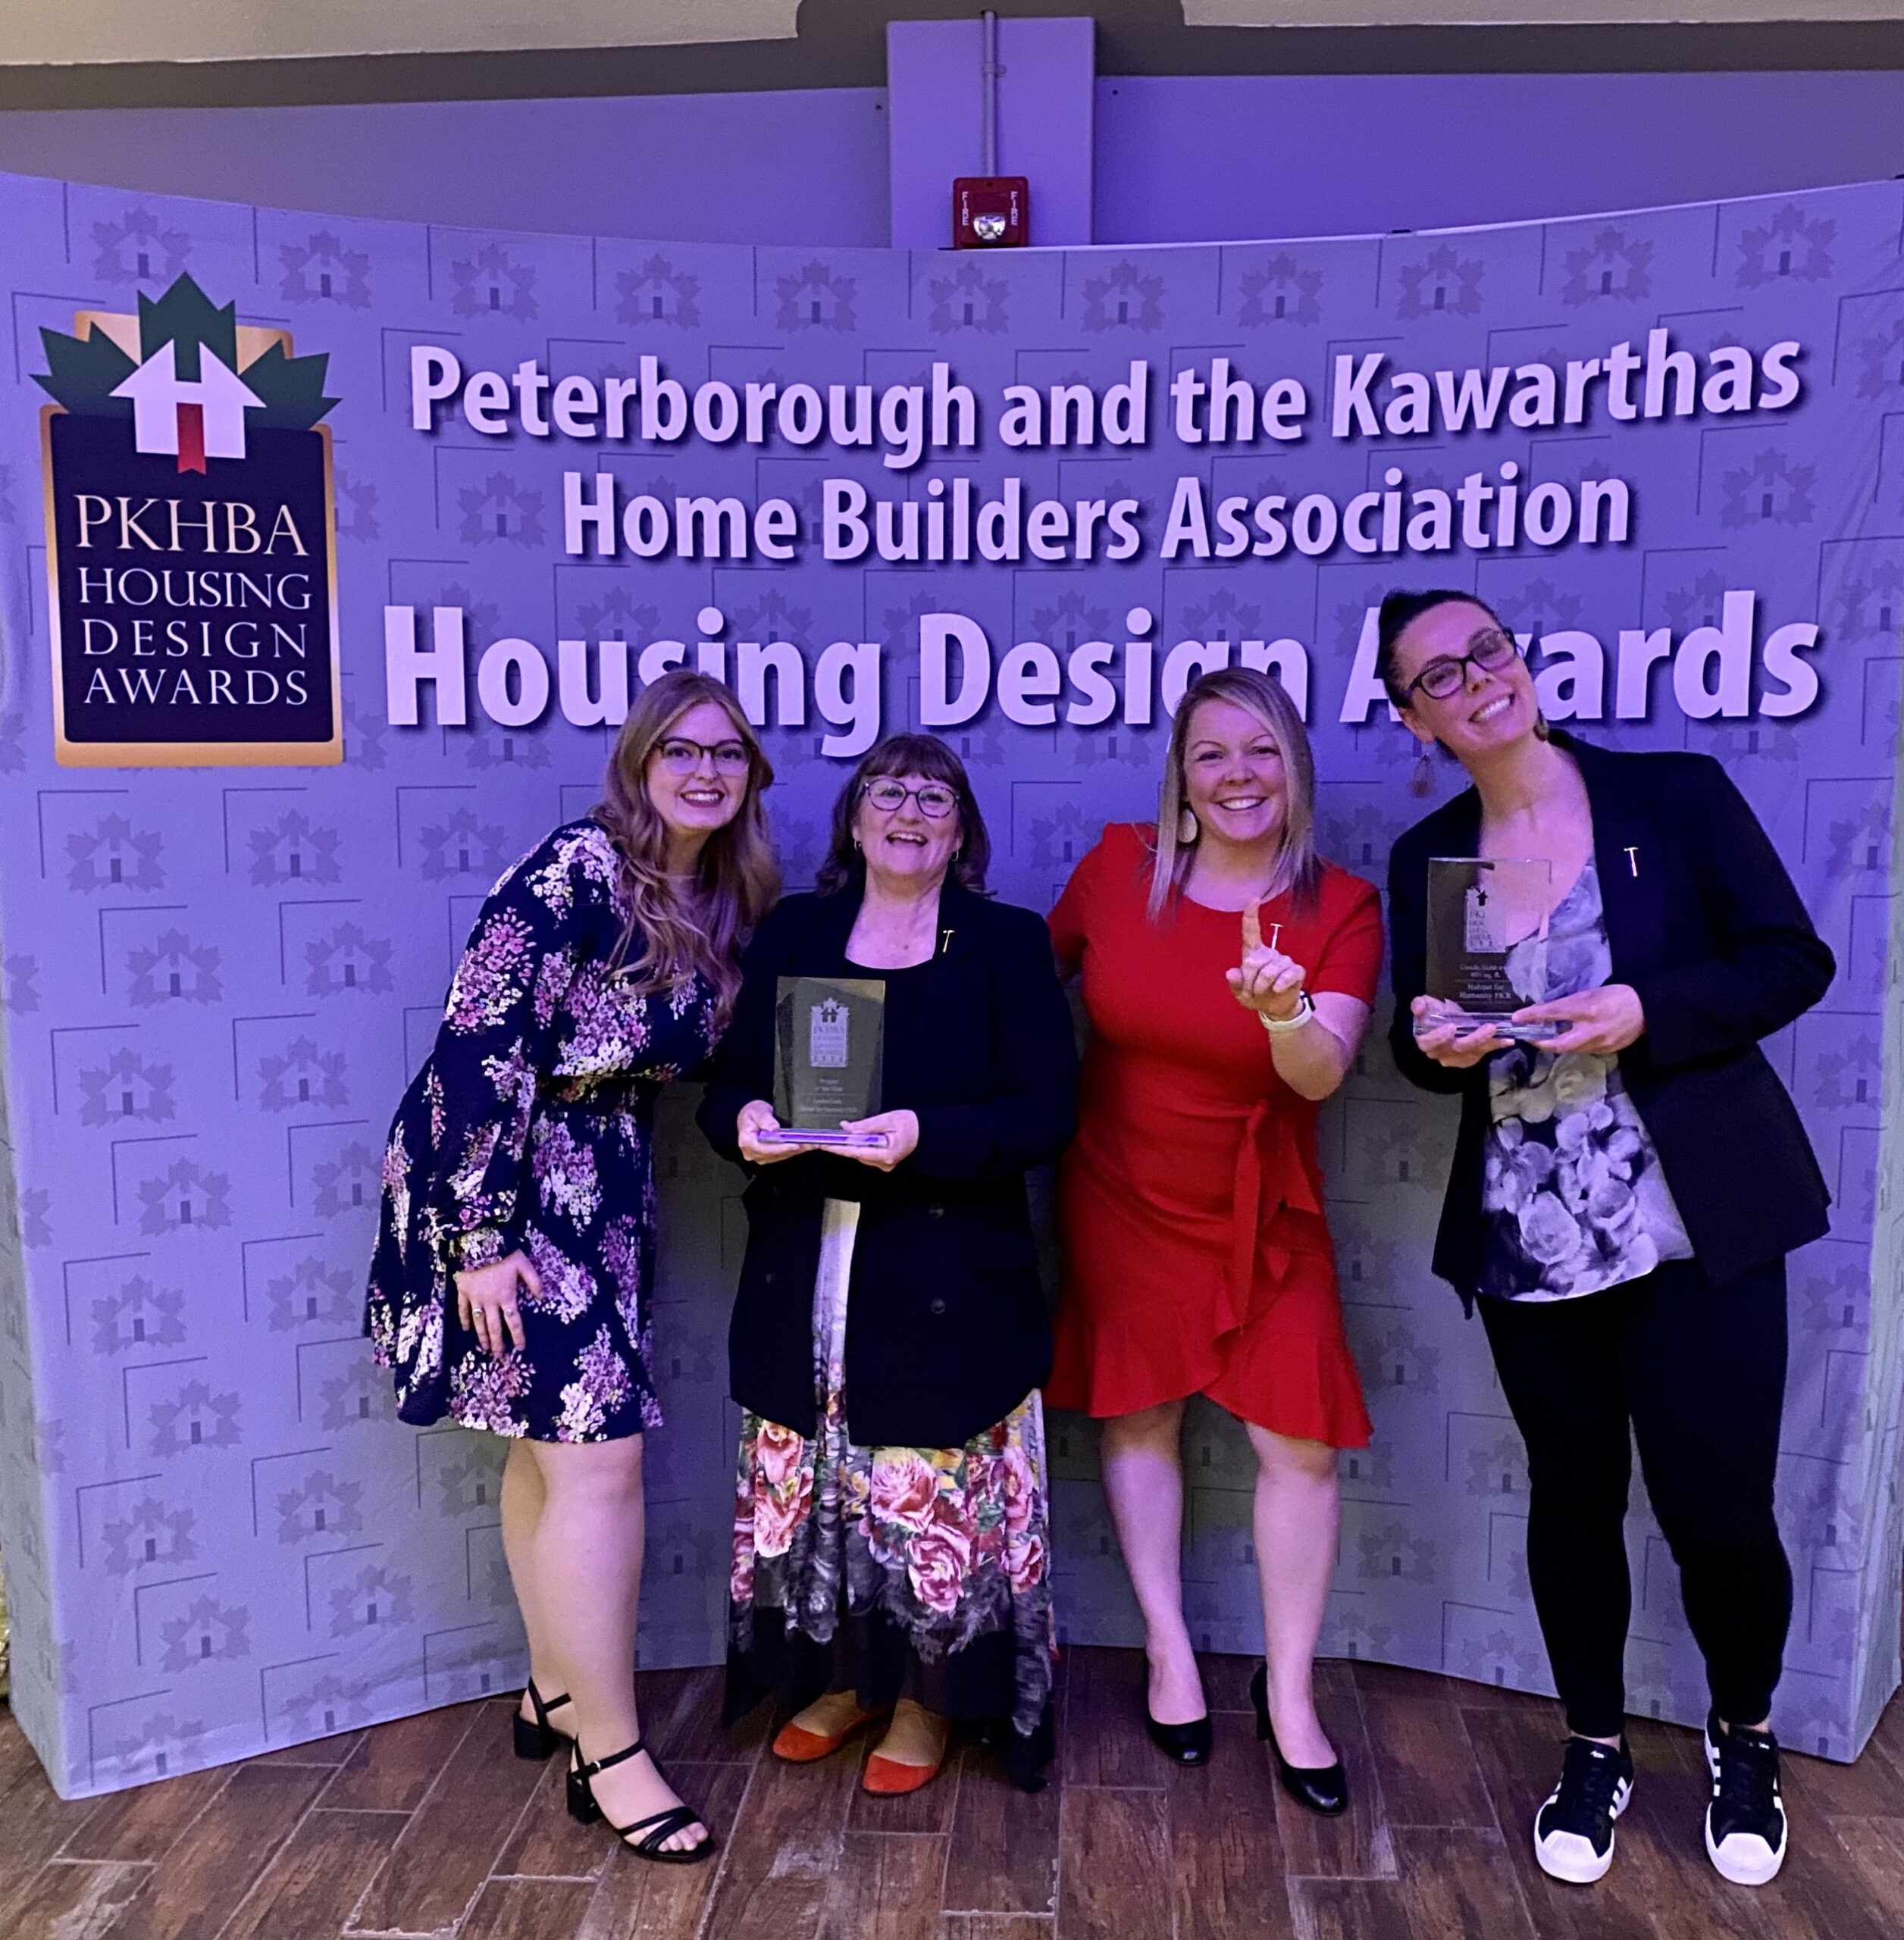 Habitat PKR Team (Jenn, Sue, Christina & Kylie) holding the award plaques won, in front of the PKHBA Housing Design Awards gala backdrop